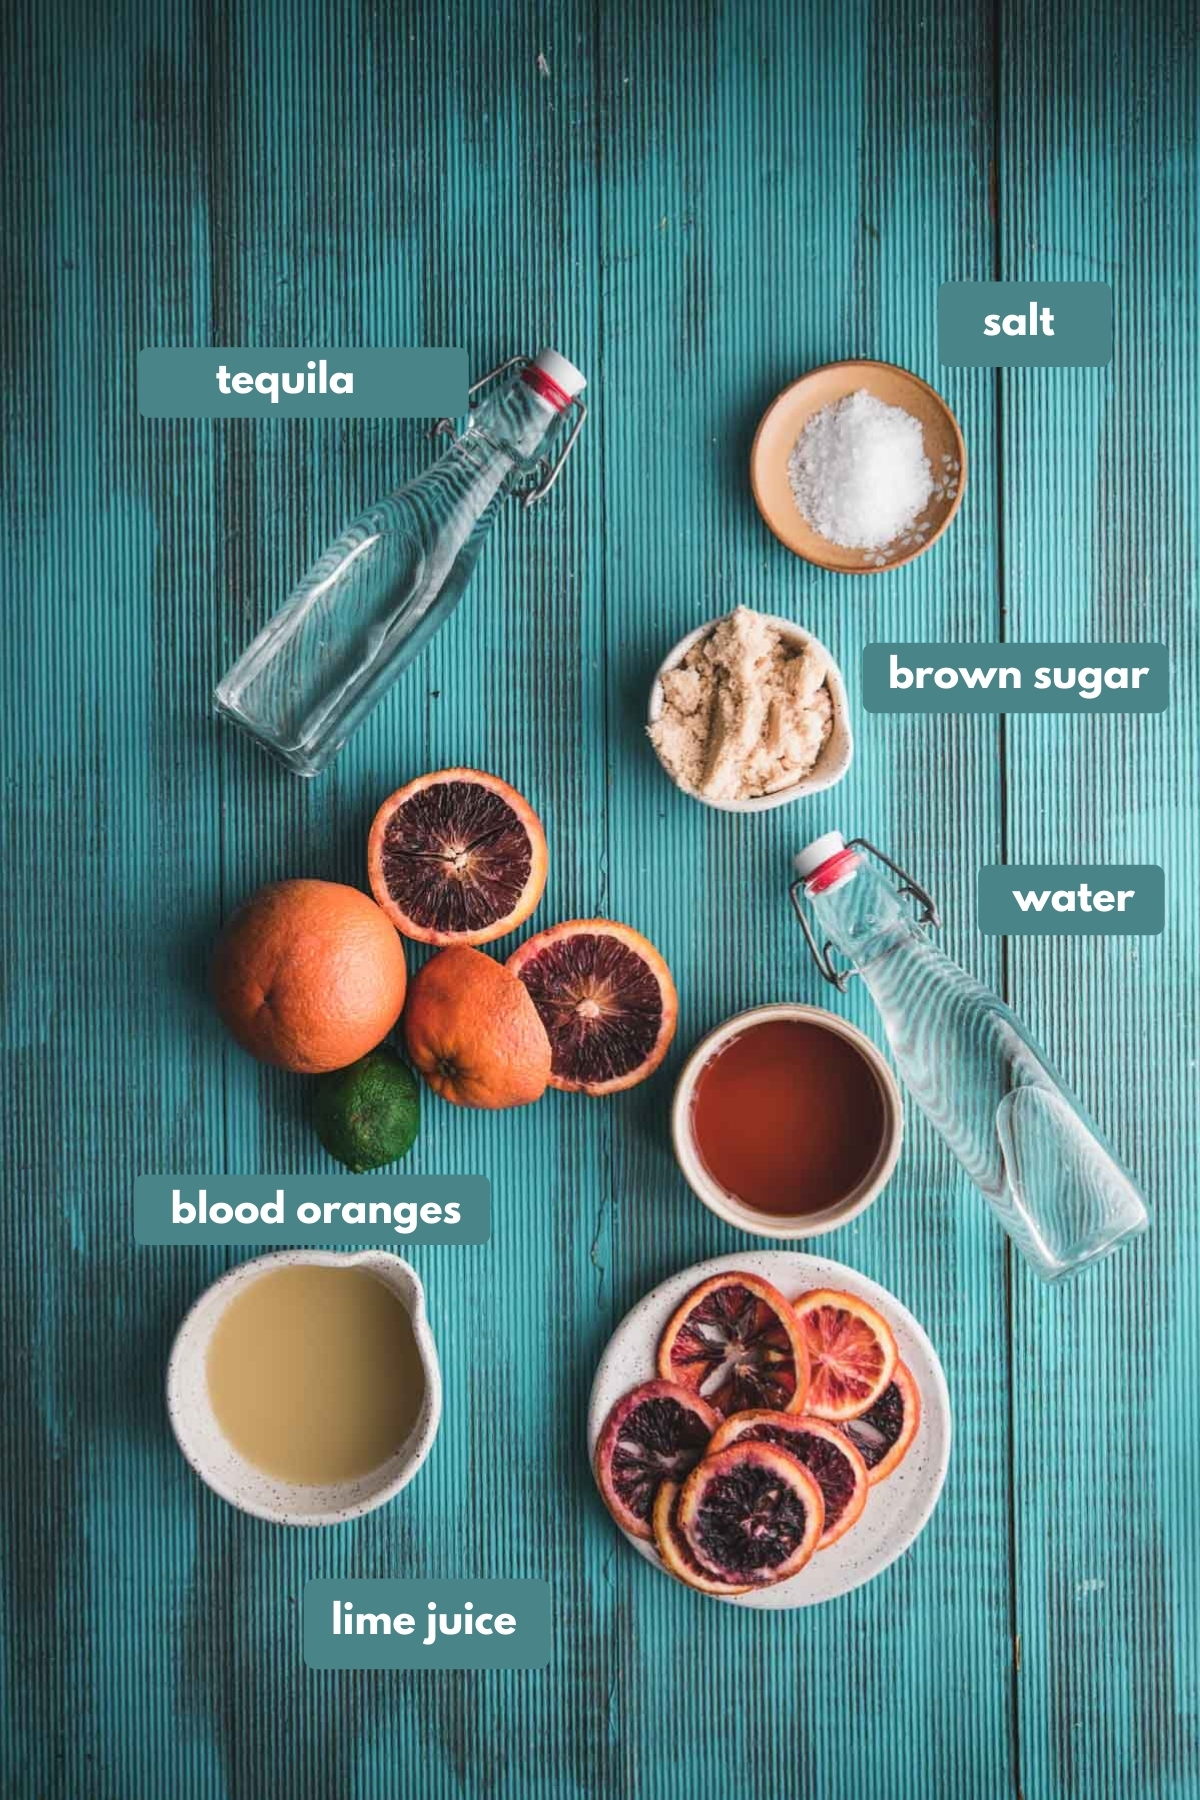 labeled ingredients for blood orange margaritas